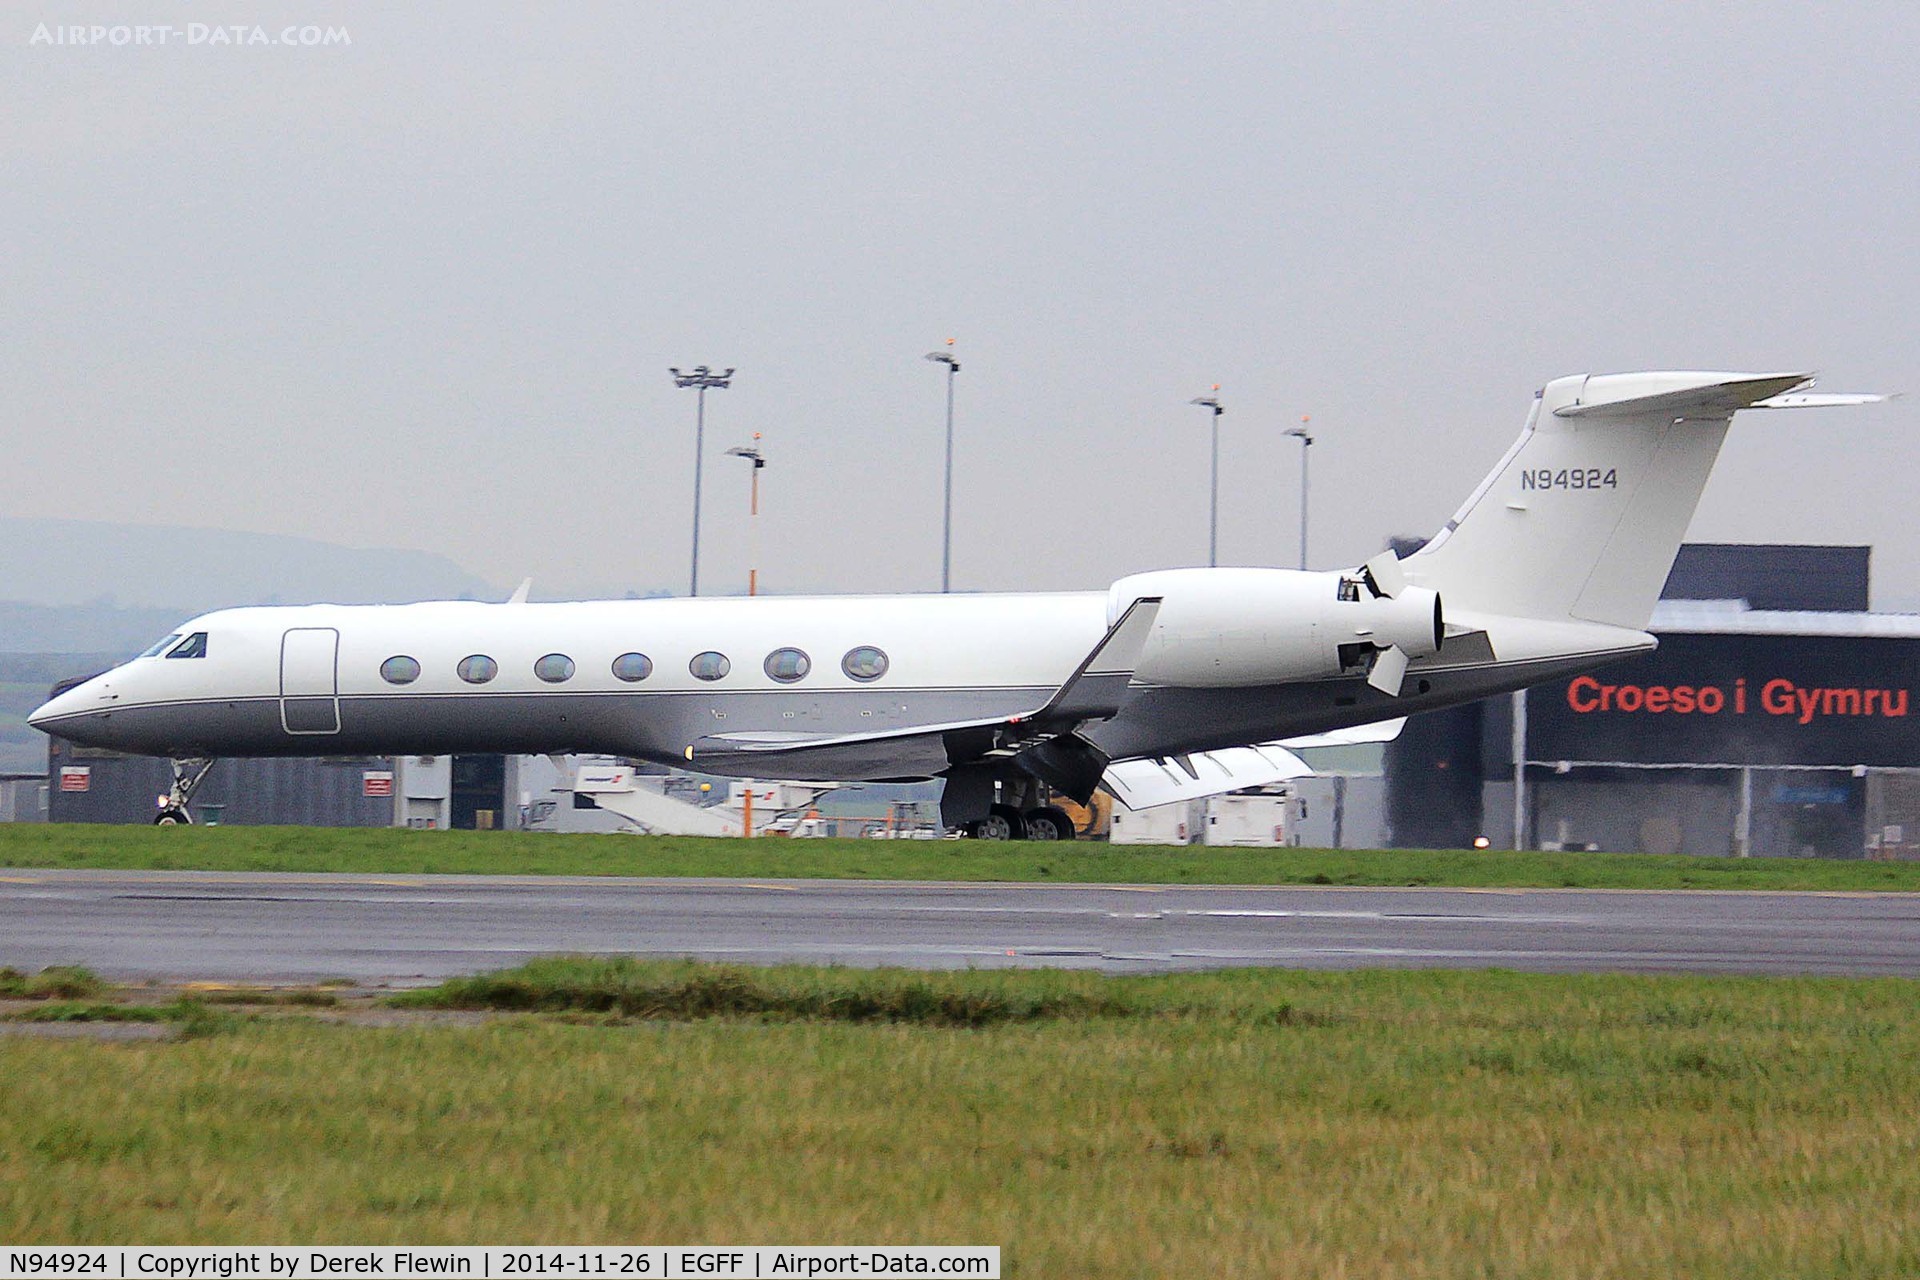 N94924, 2009 Gulfstream Aerospace GV-SP (G550) C/N 5255, Gulfstream G550, previously N955GA, callsign Jetspeed 949, seen landing on runway 30 at EGFF, out of Newquay.